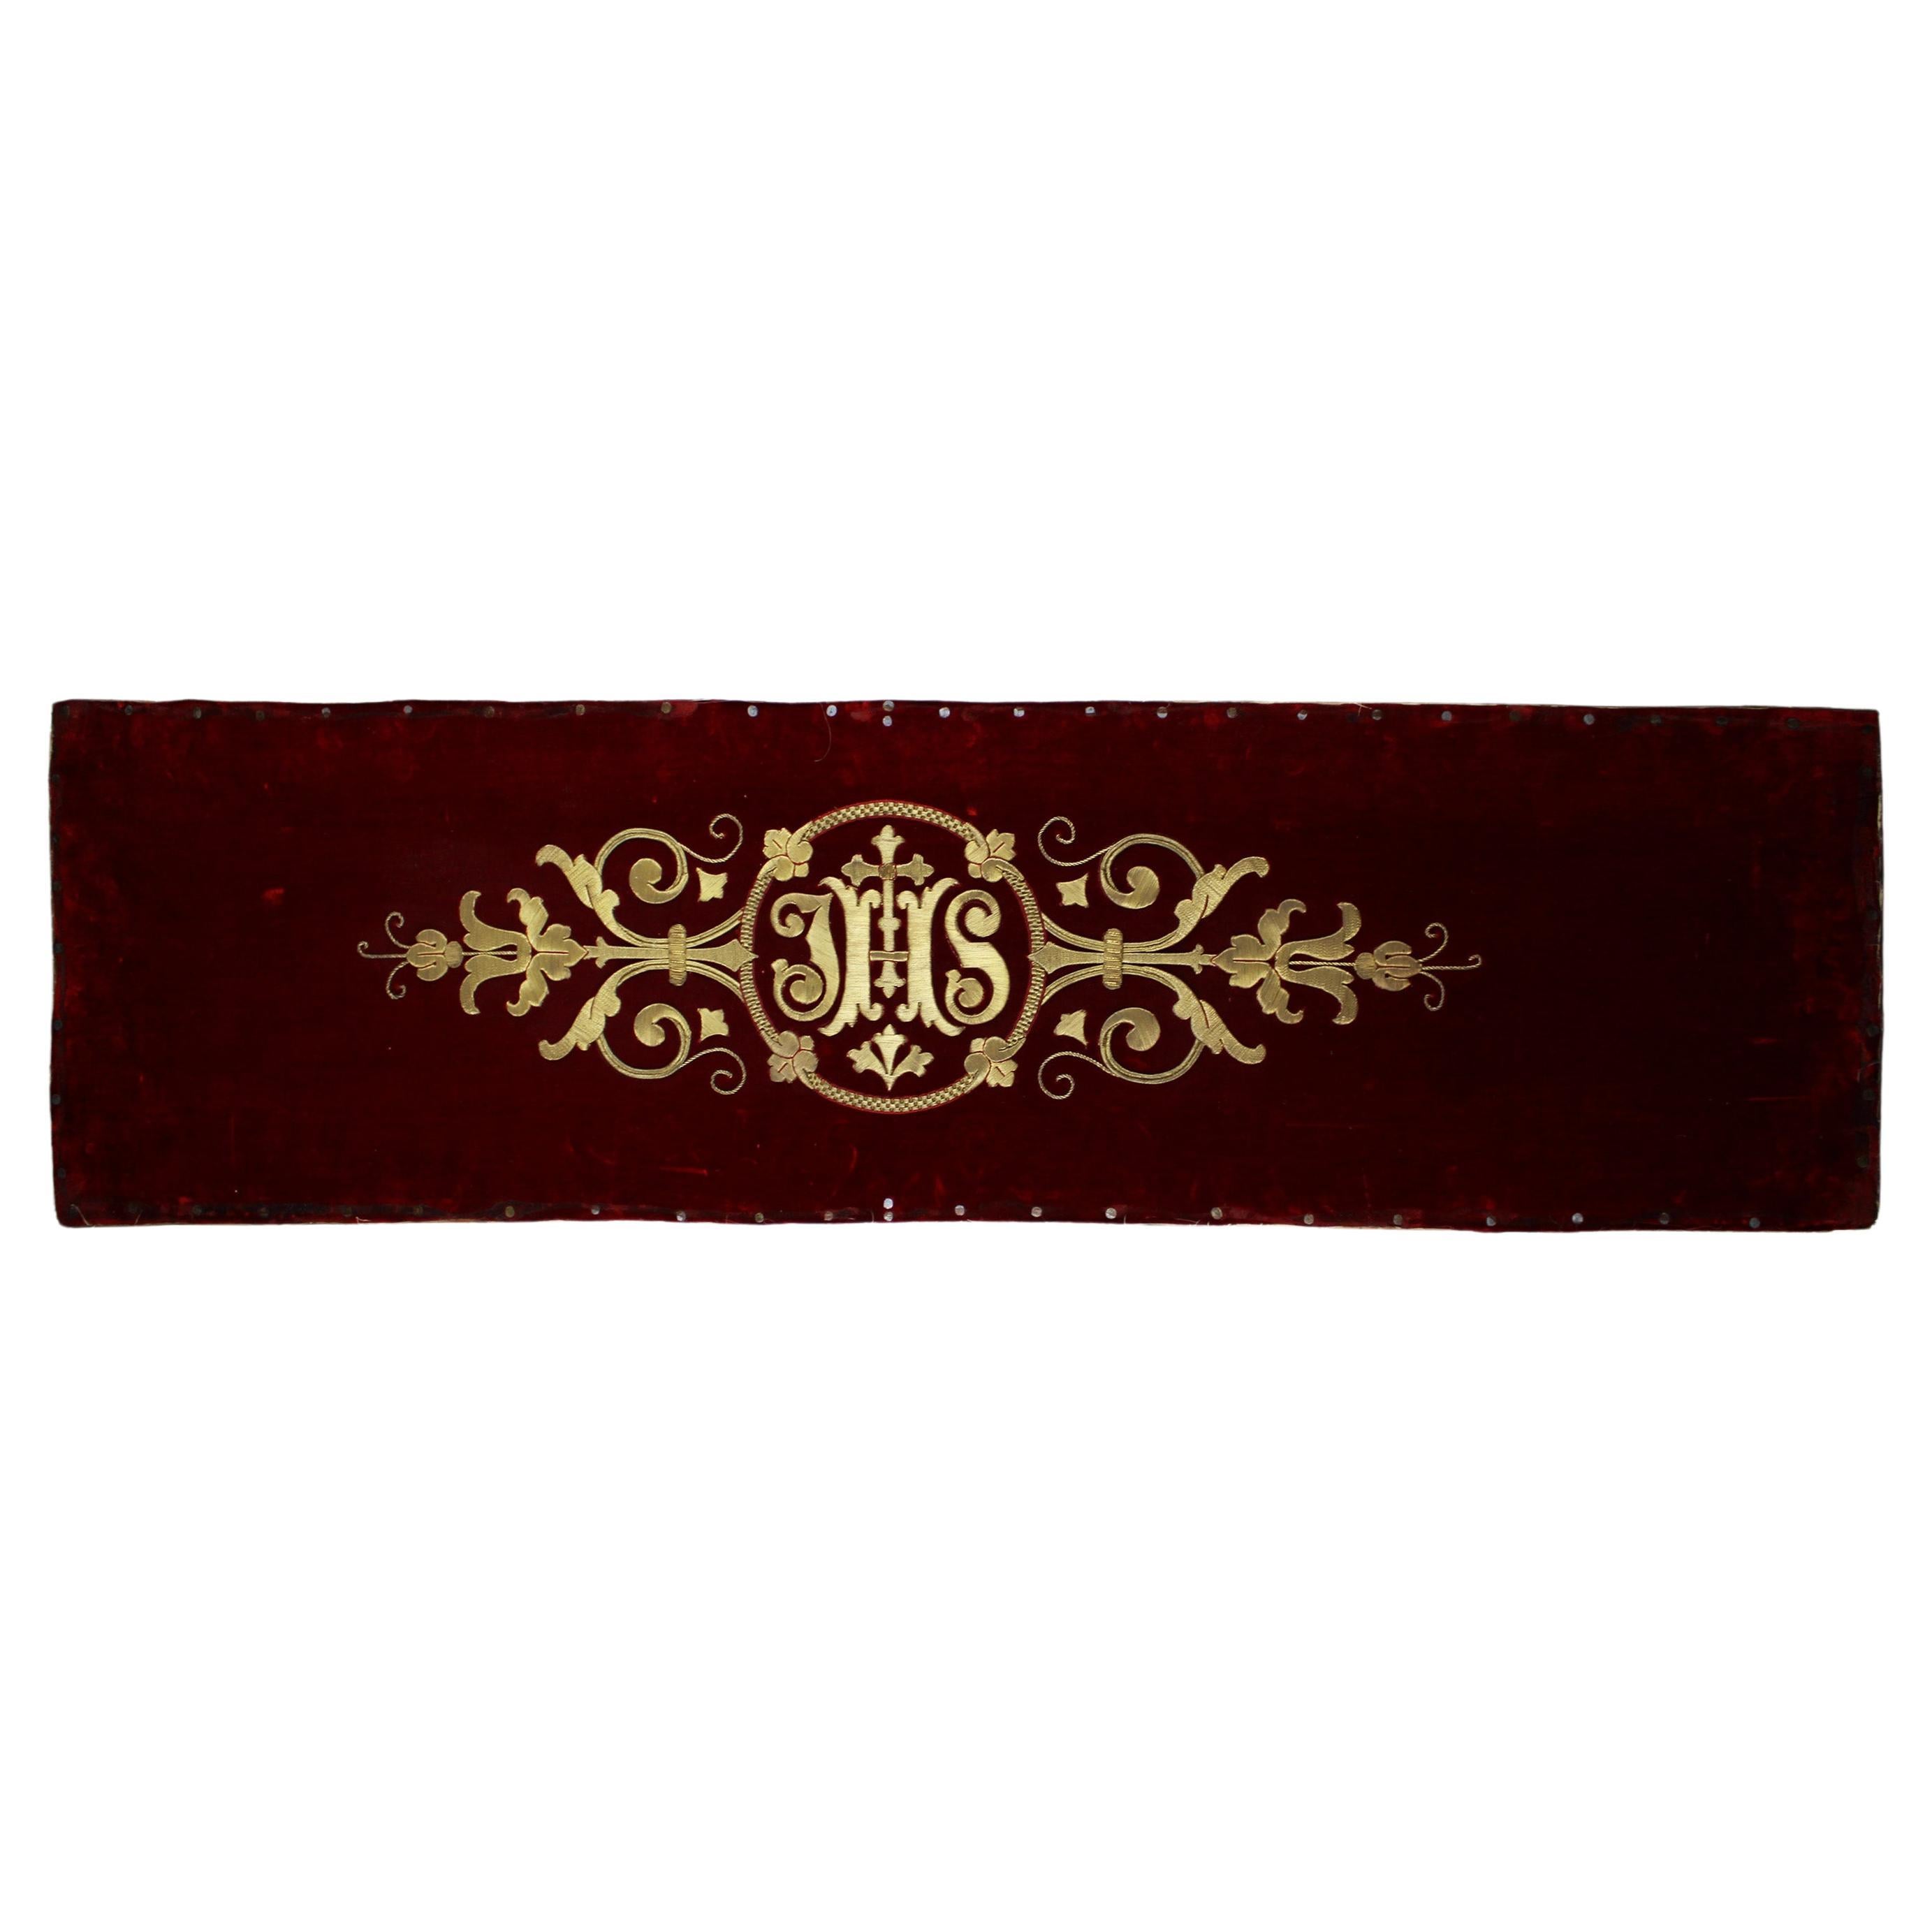 19th century raised gold work embroidery liturgical on red silk velvet Belgium For Sale